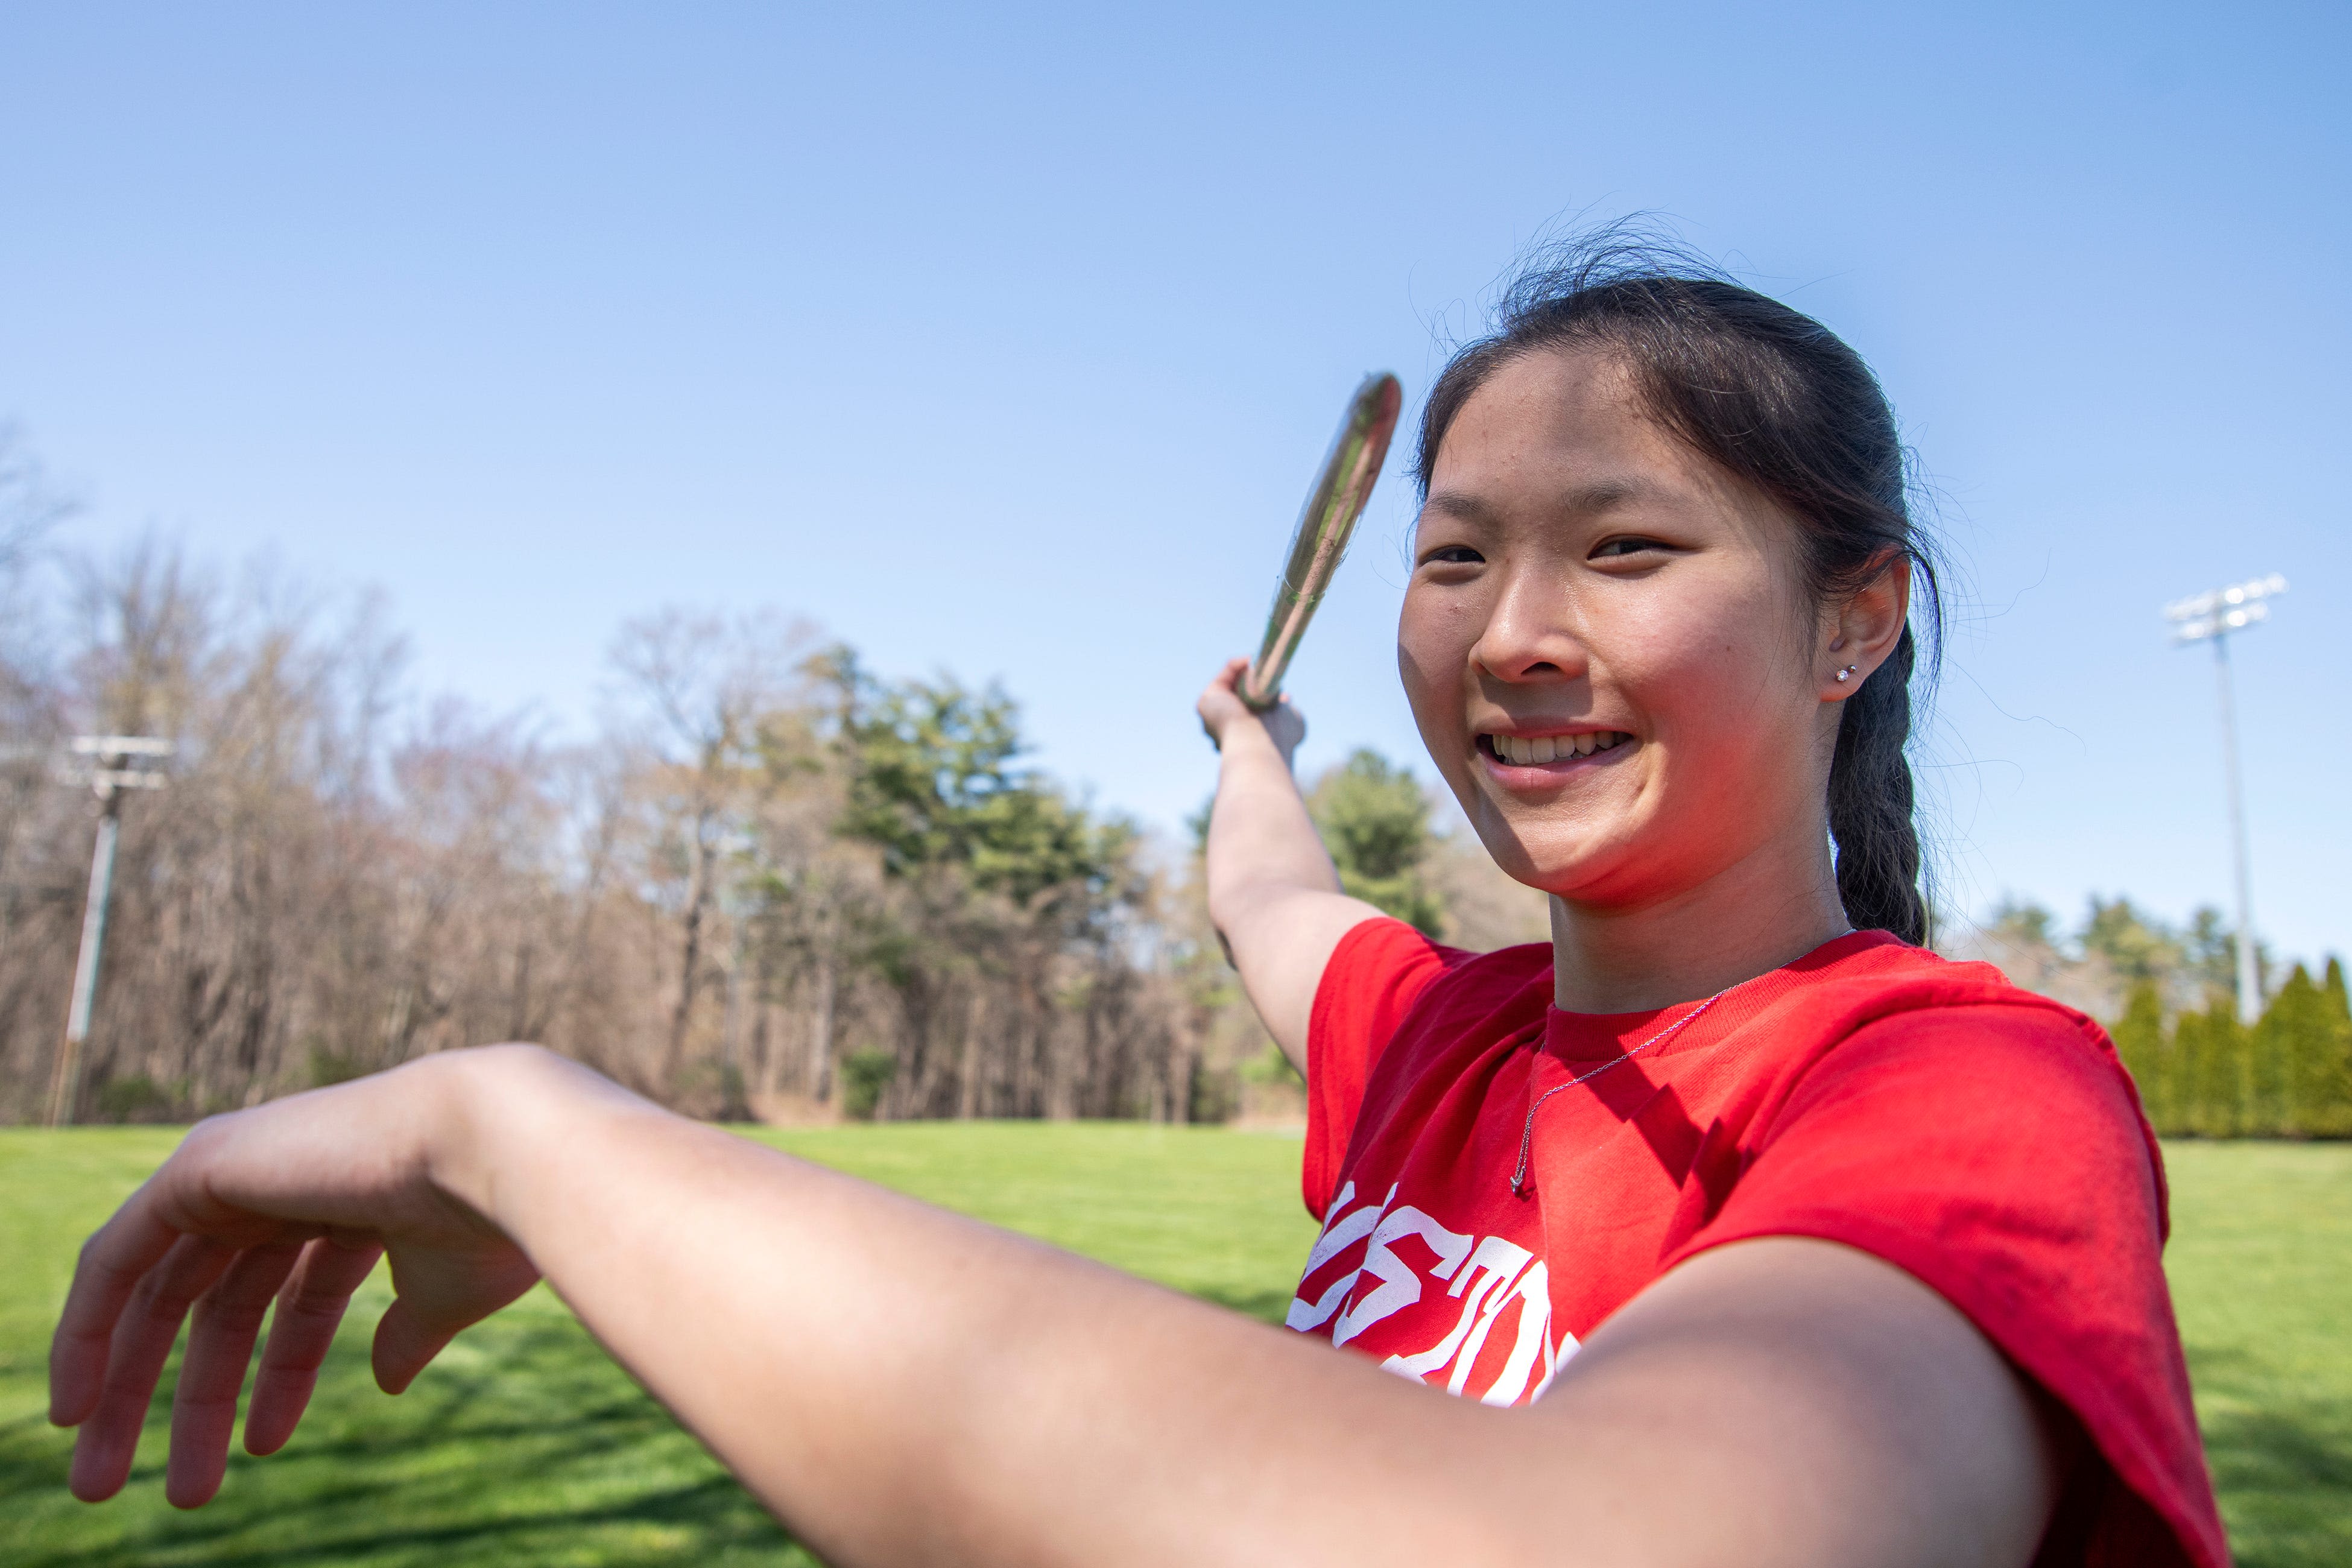 Hudson javelin thrower Savannah Gao enjoying community before heading to Boston University